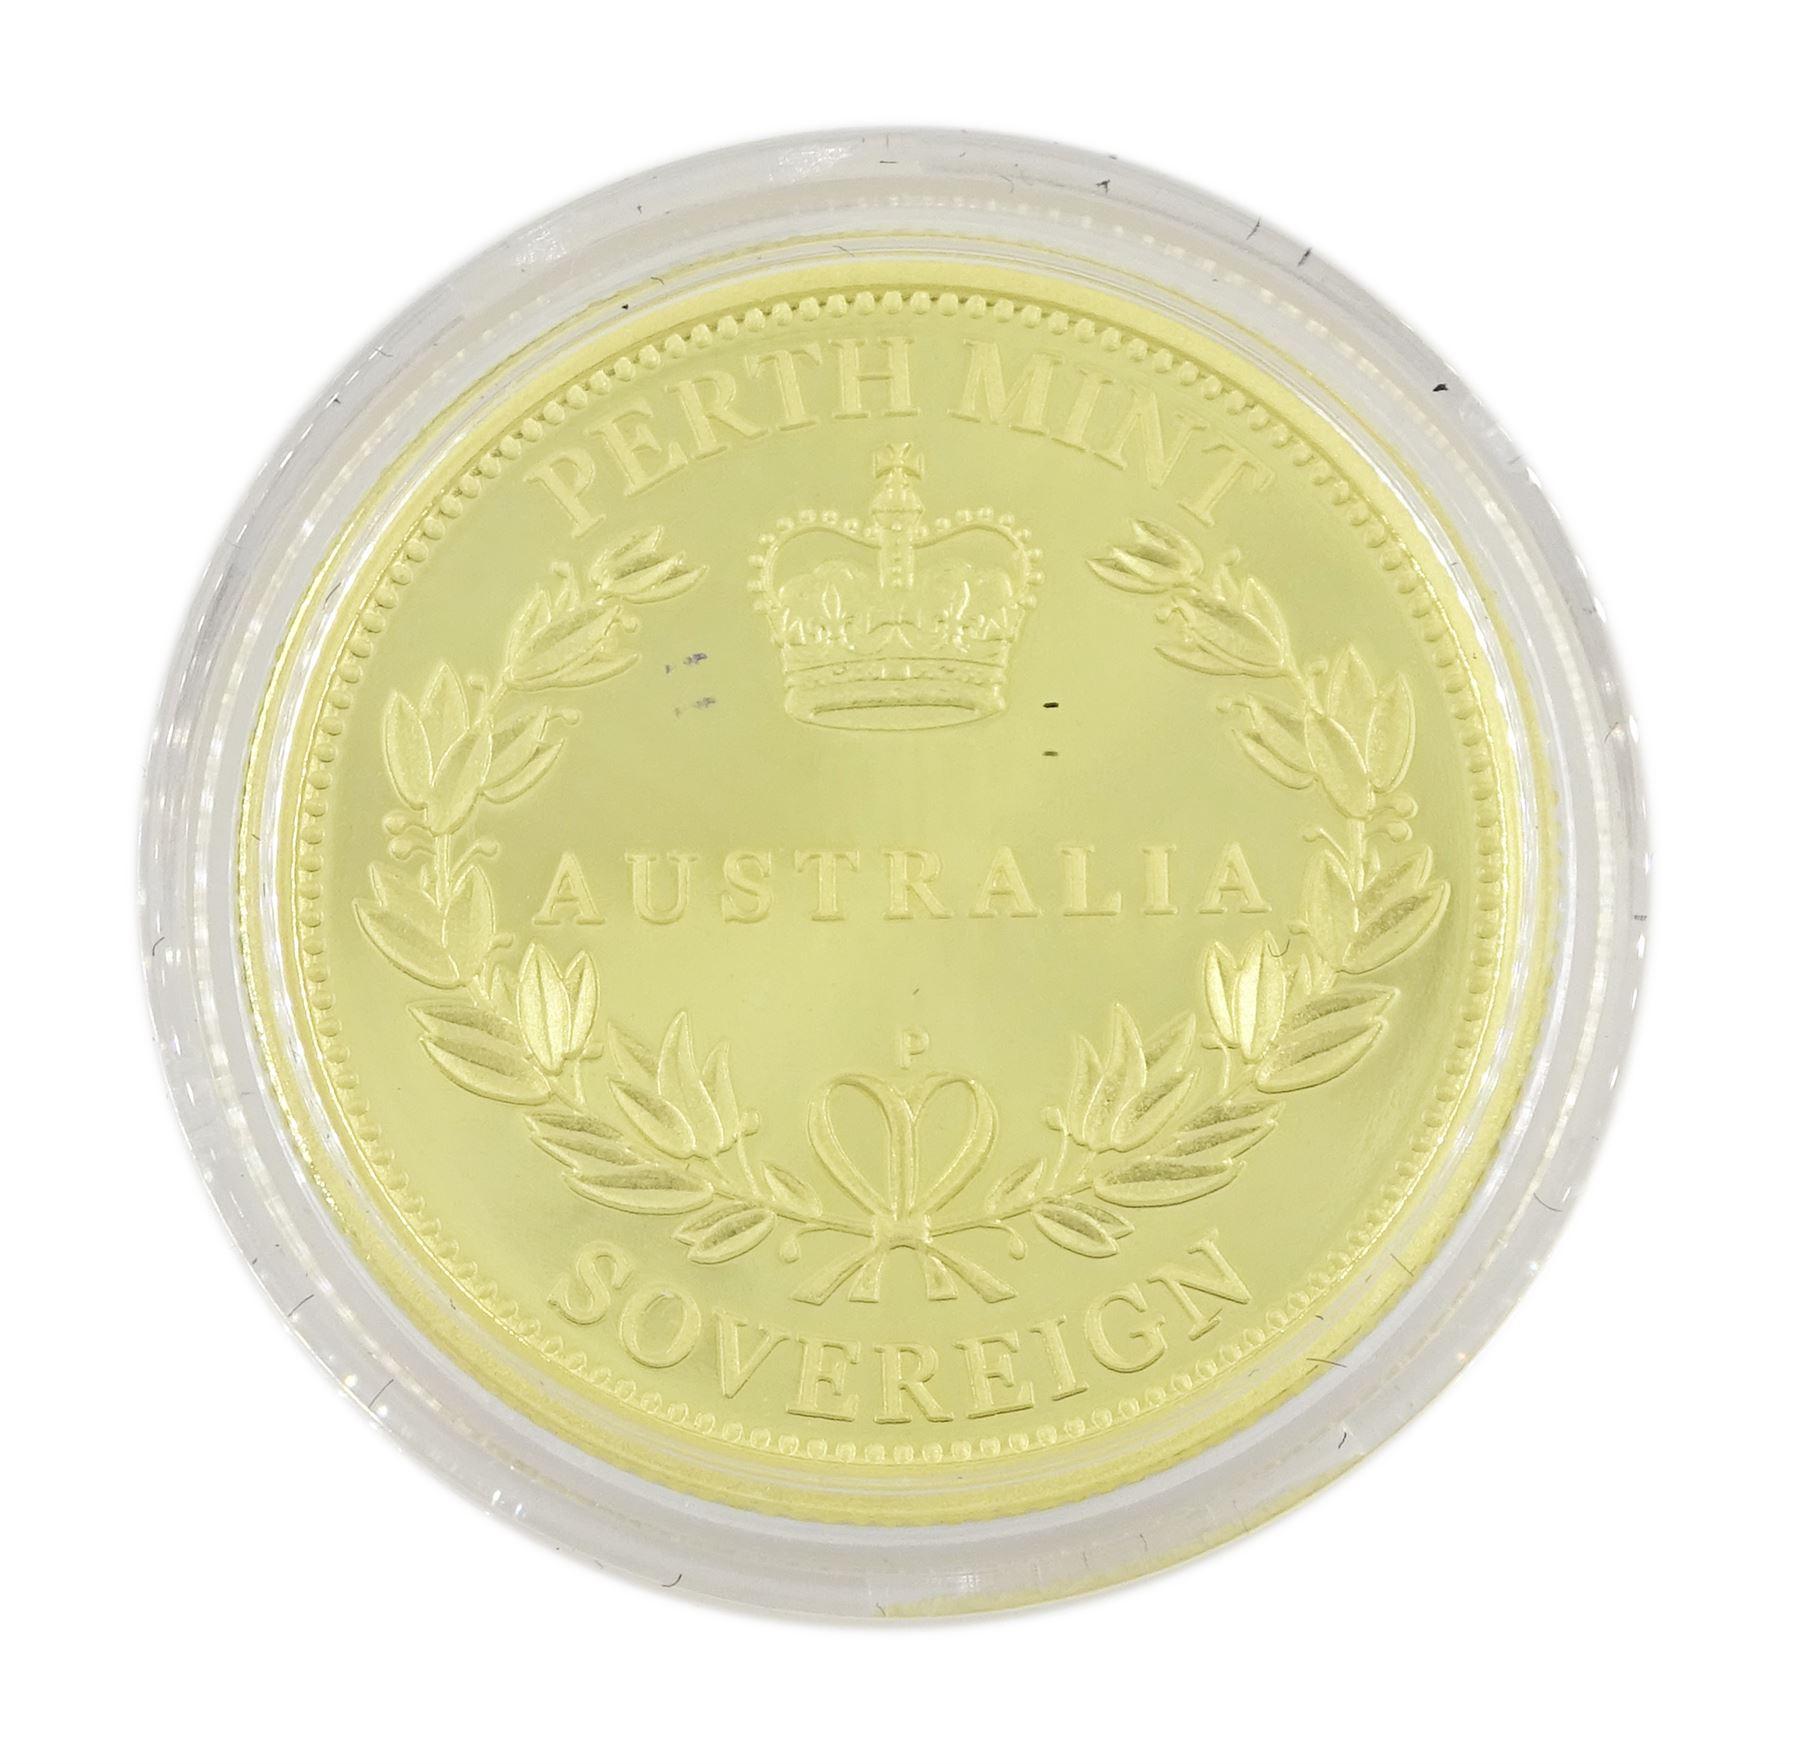 Queen Elizabeth II 2014 Australian gold proof full sovereign coin - Image 2 of 3